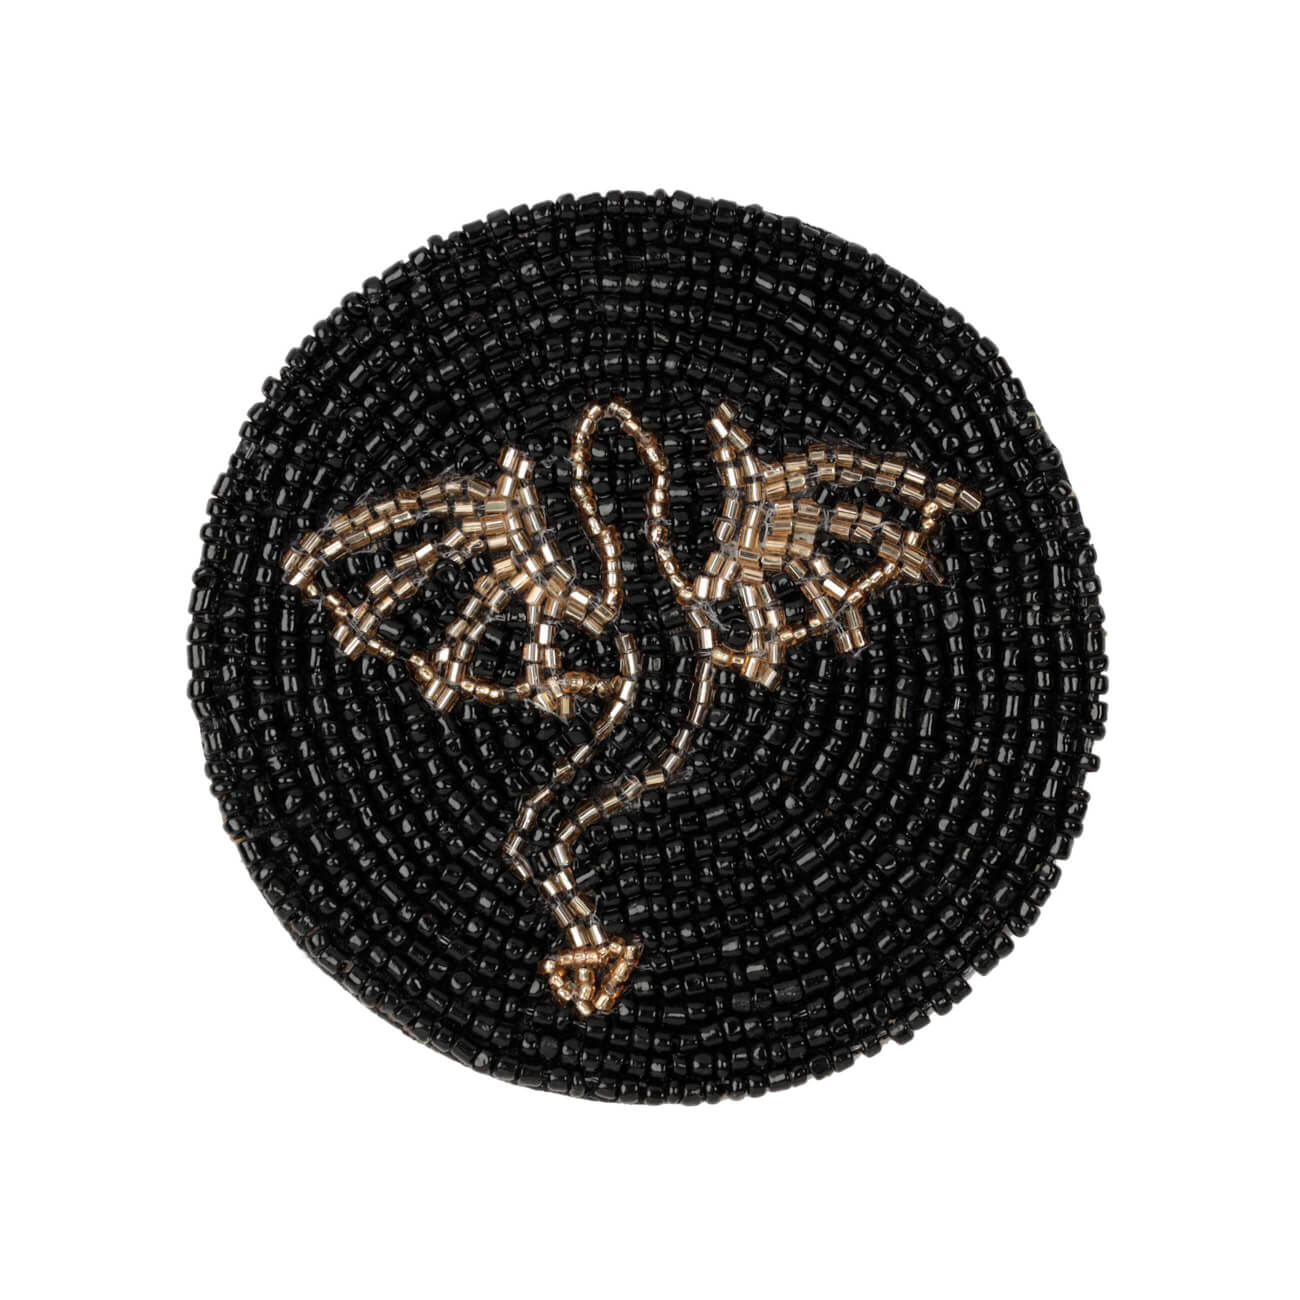 Подставка под кружку, 10 см, бисер, круглая, черная, Дракон, Art beads ключница дракон 12х15 см